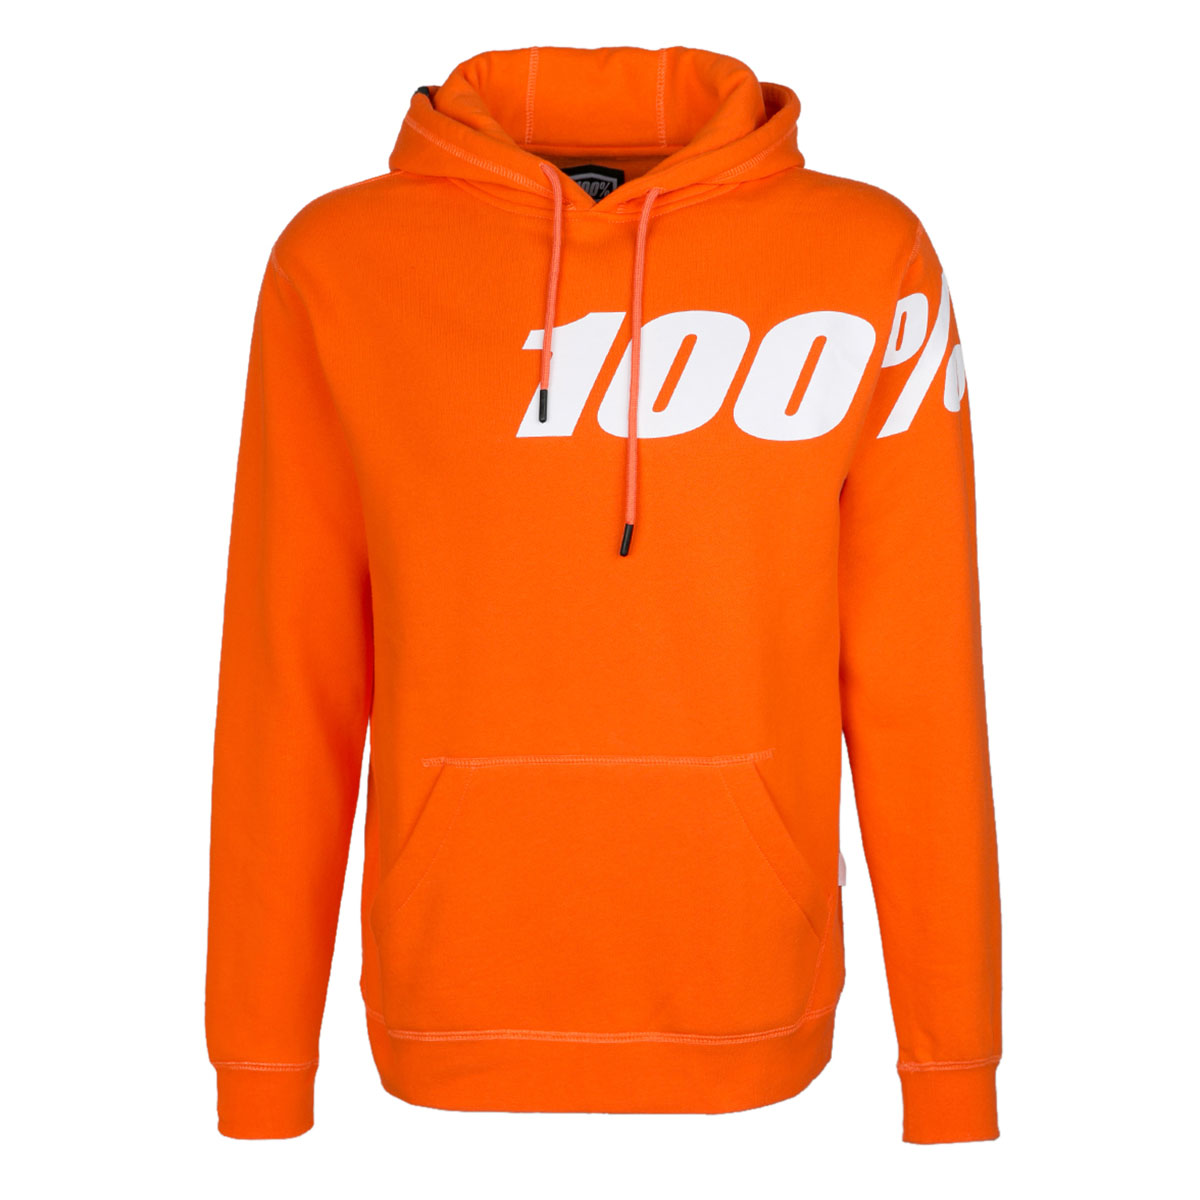 100% Hoody Disrupt Orange